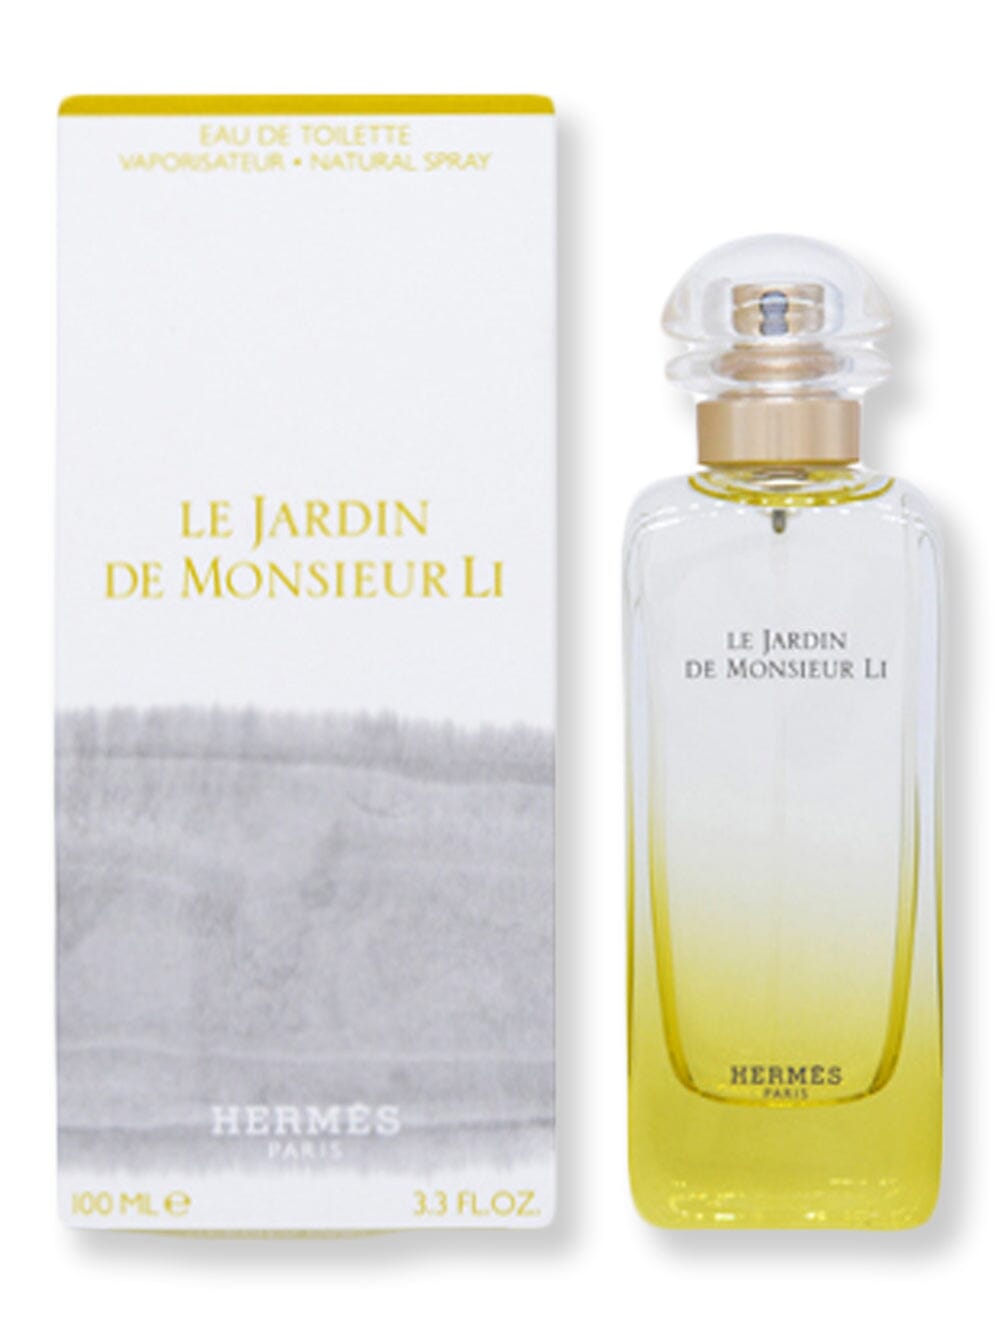 Hermes Hermes Le Jardin De Monsieur Li EDT Spray 3.3 oz100 ml Perfume 